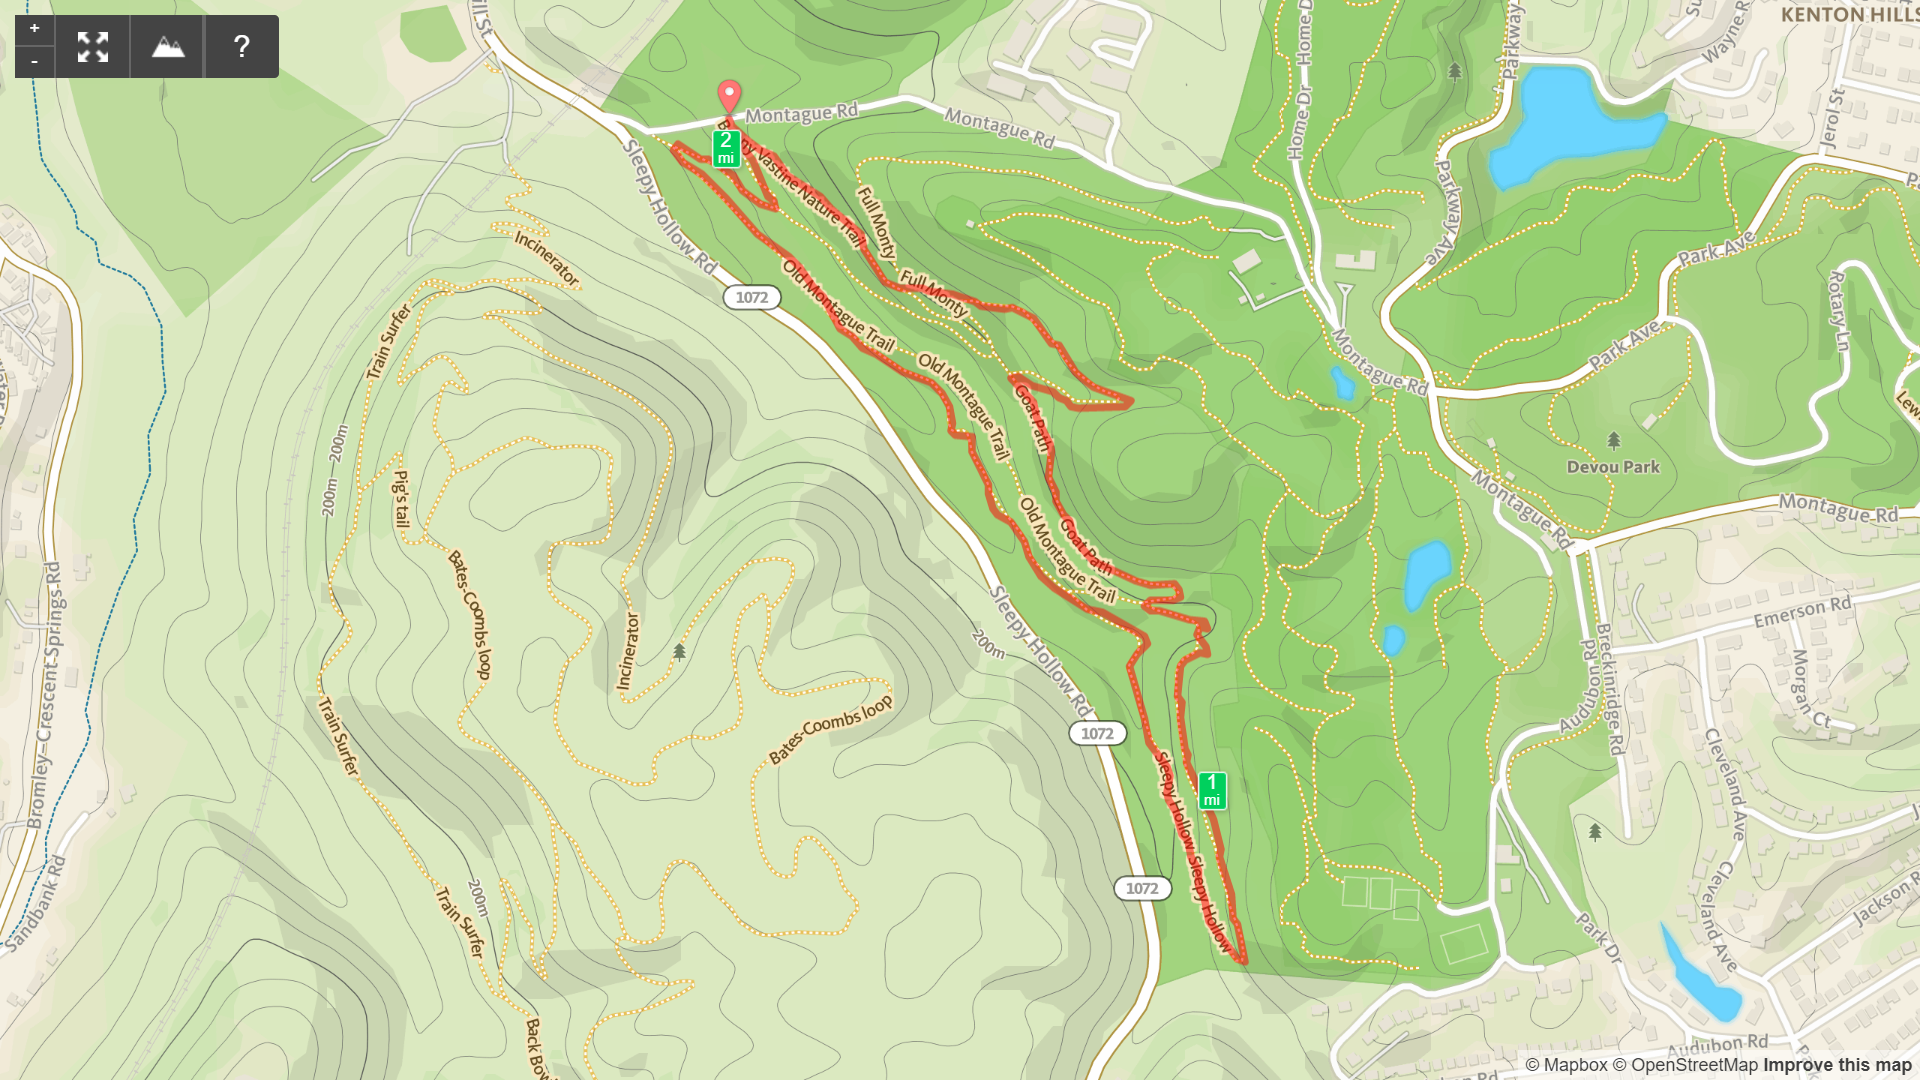 Map of Devou Park Central Loop - Vastine, Goat Path, Sleepy Hollow Trails - Kentucky Hiker Project.png